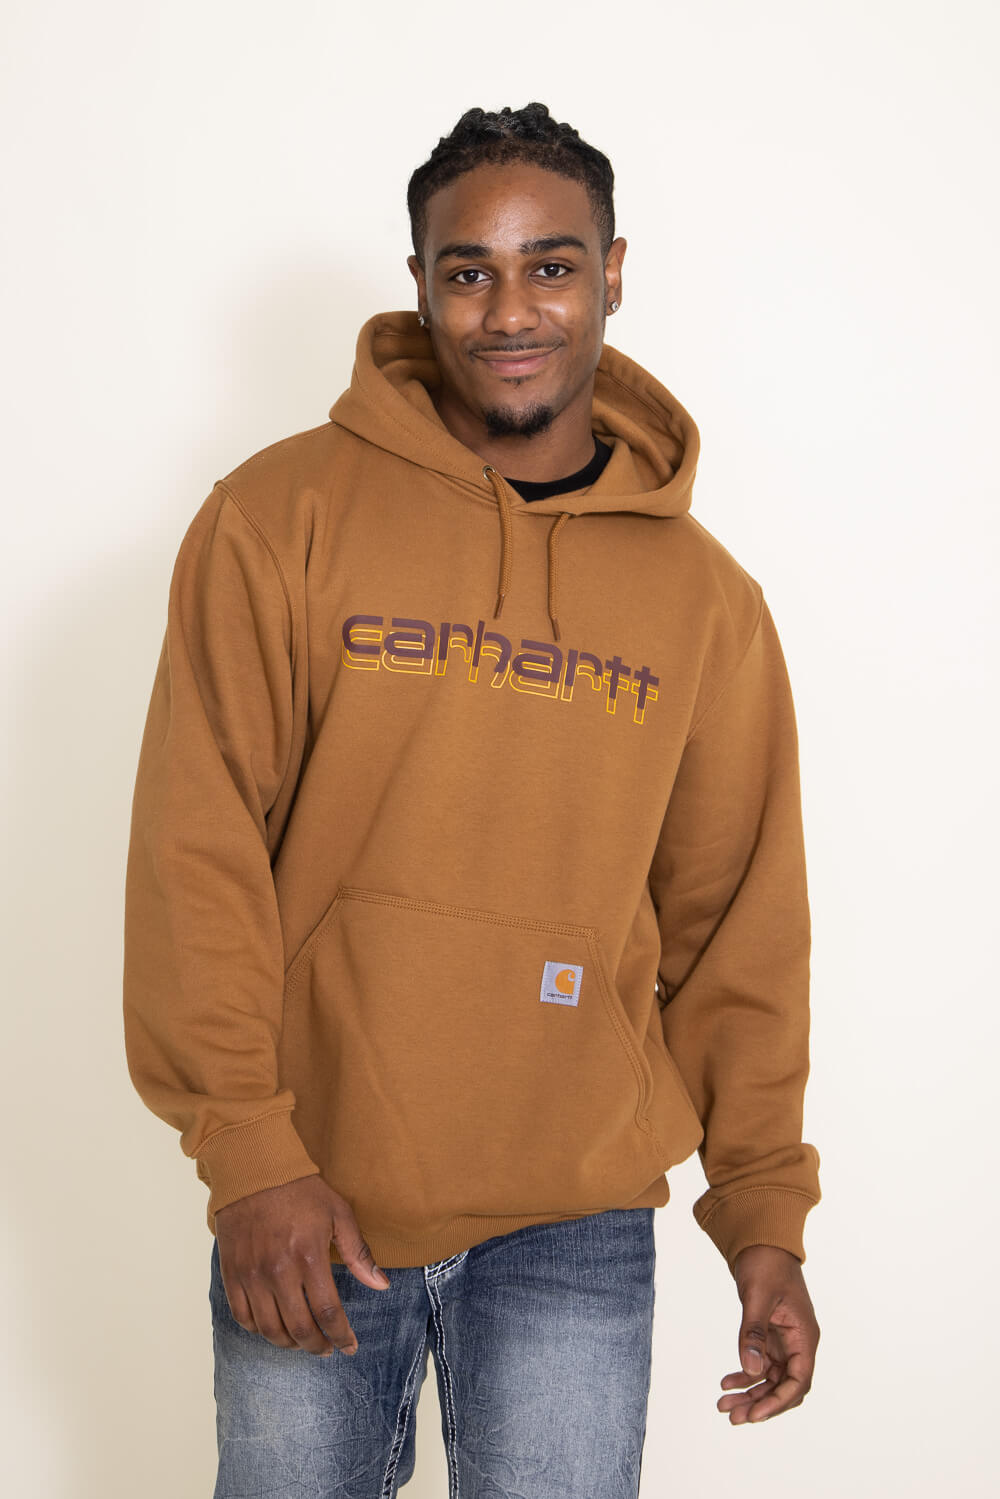 Carhartt Men's Midweight Hooded Logo Sweatshirt - Brown